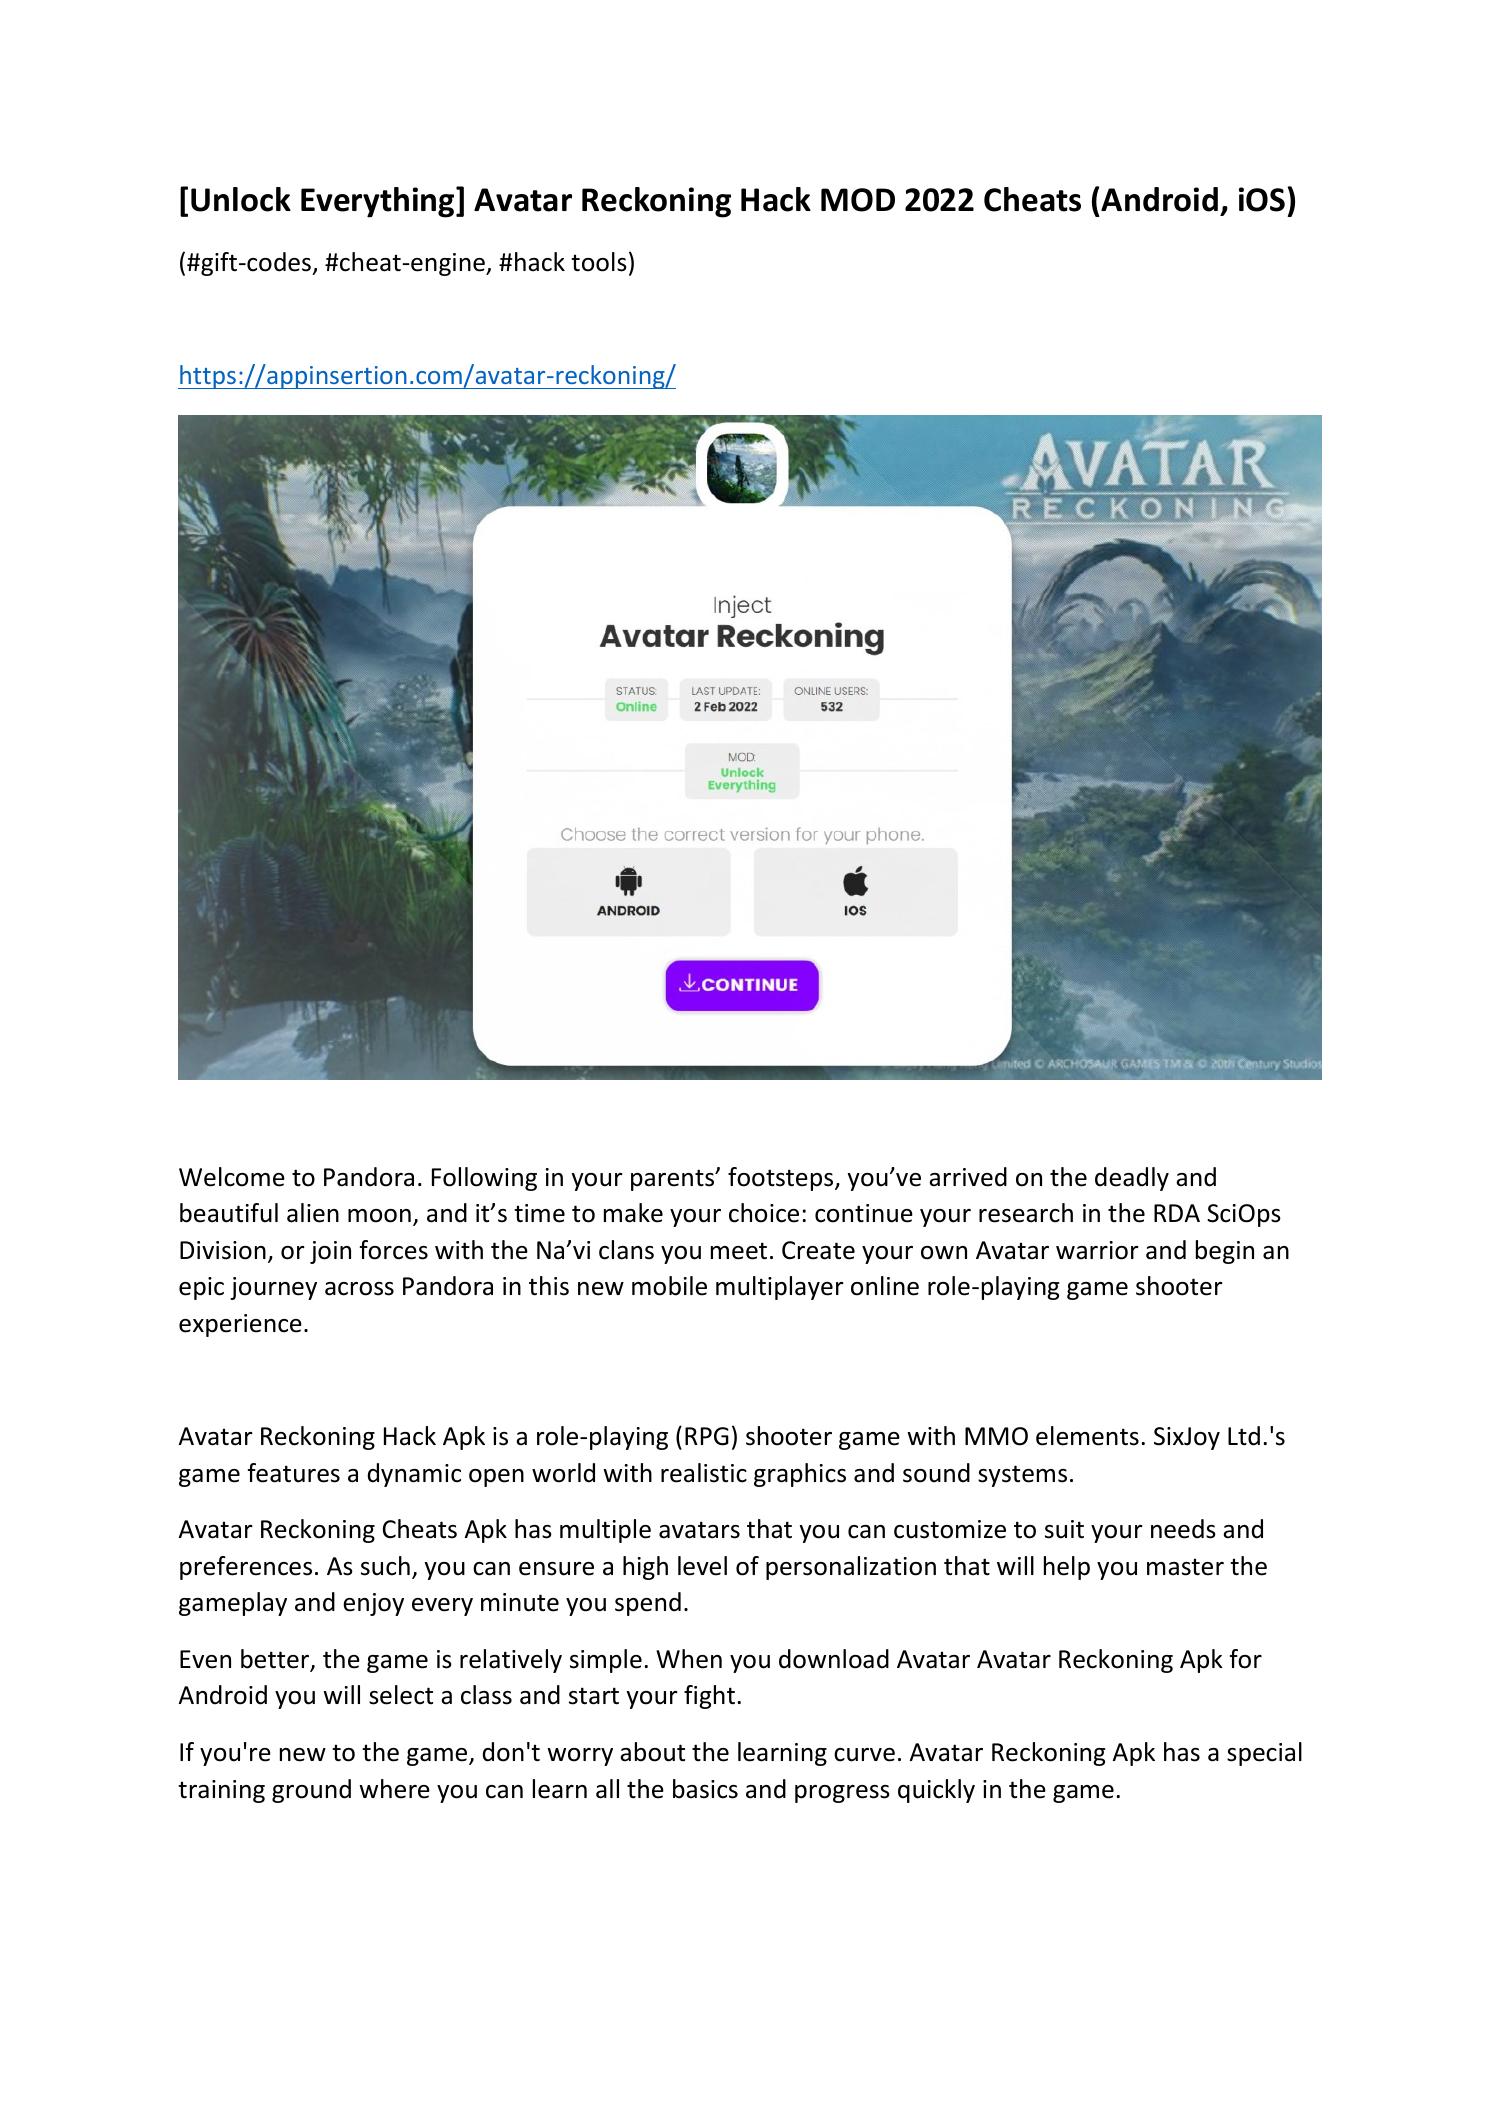 Unlock Everything] Avatar Reckoning Hack MOD 2022 Cheats (Android, iOS).pdf